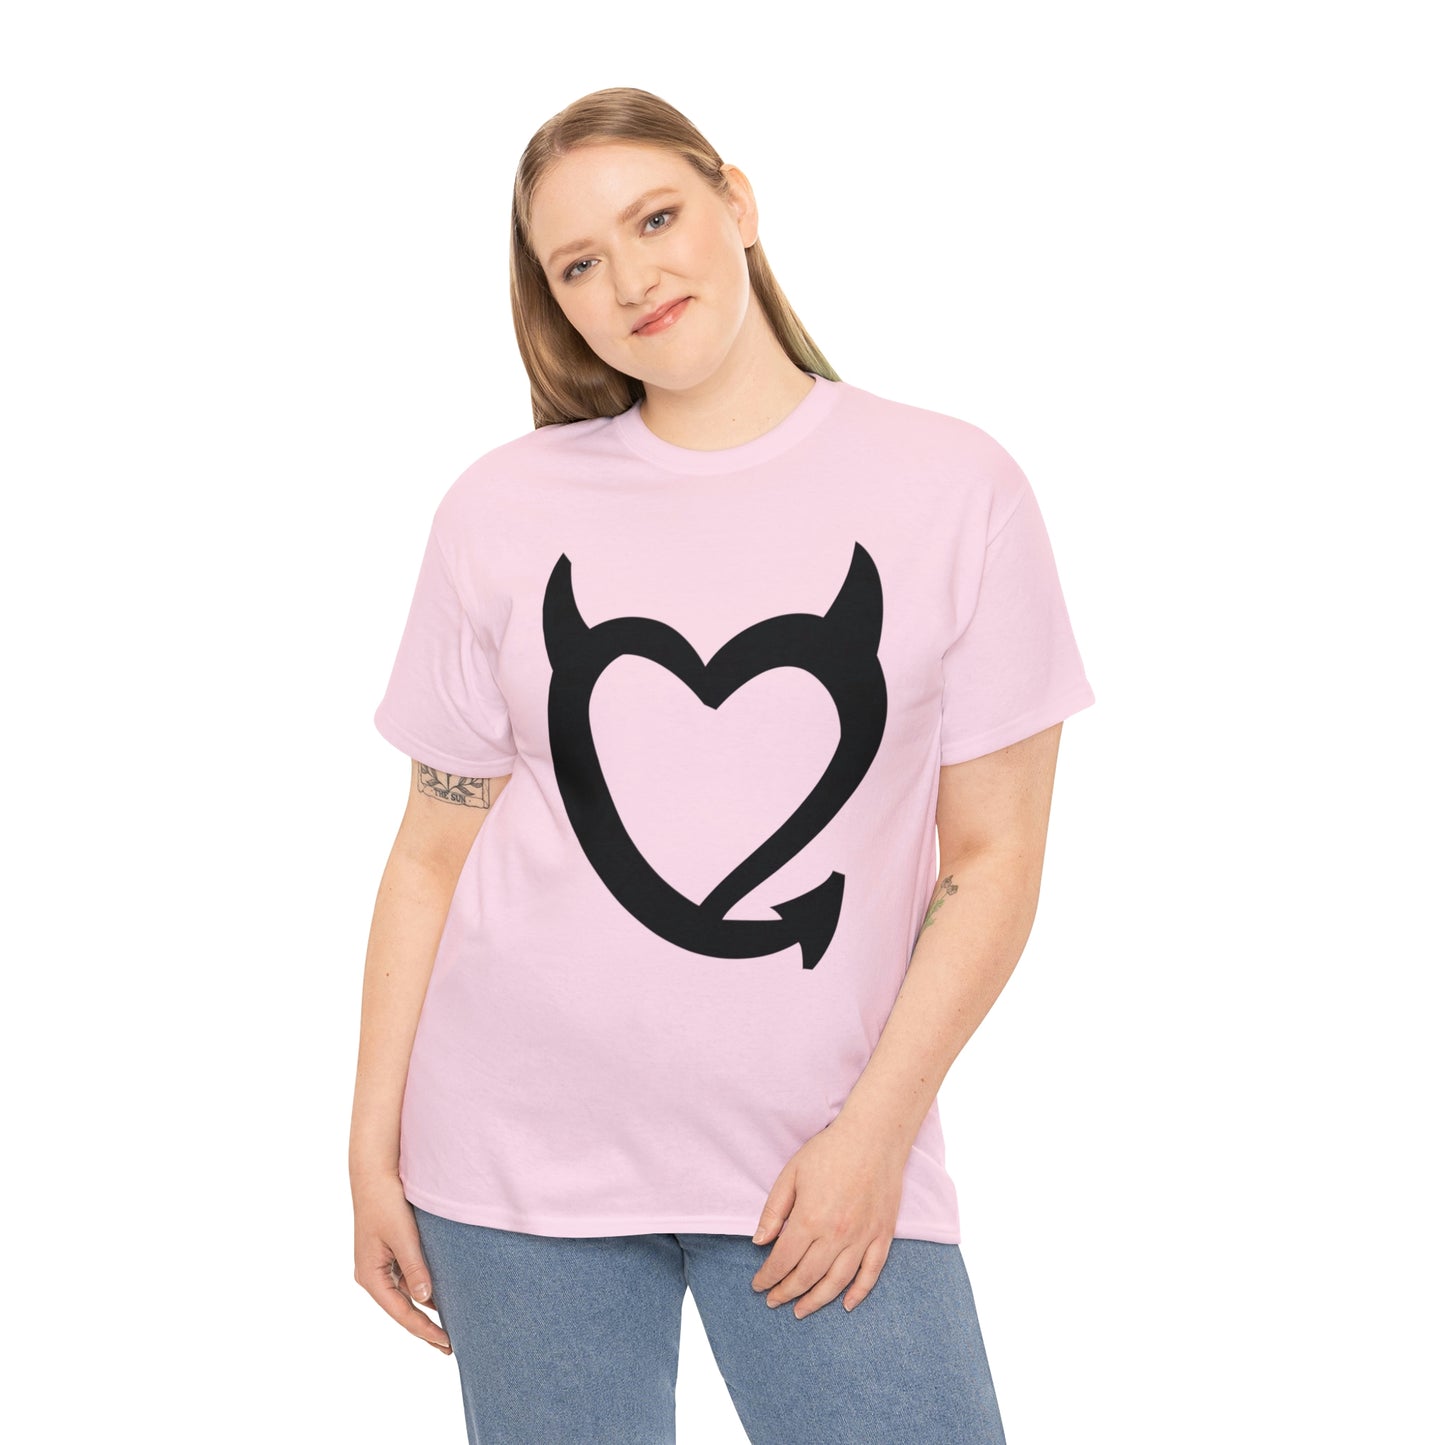 Bad Girls Heart Shirt Up to 5x